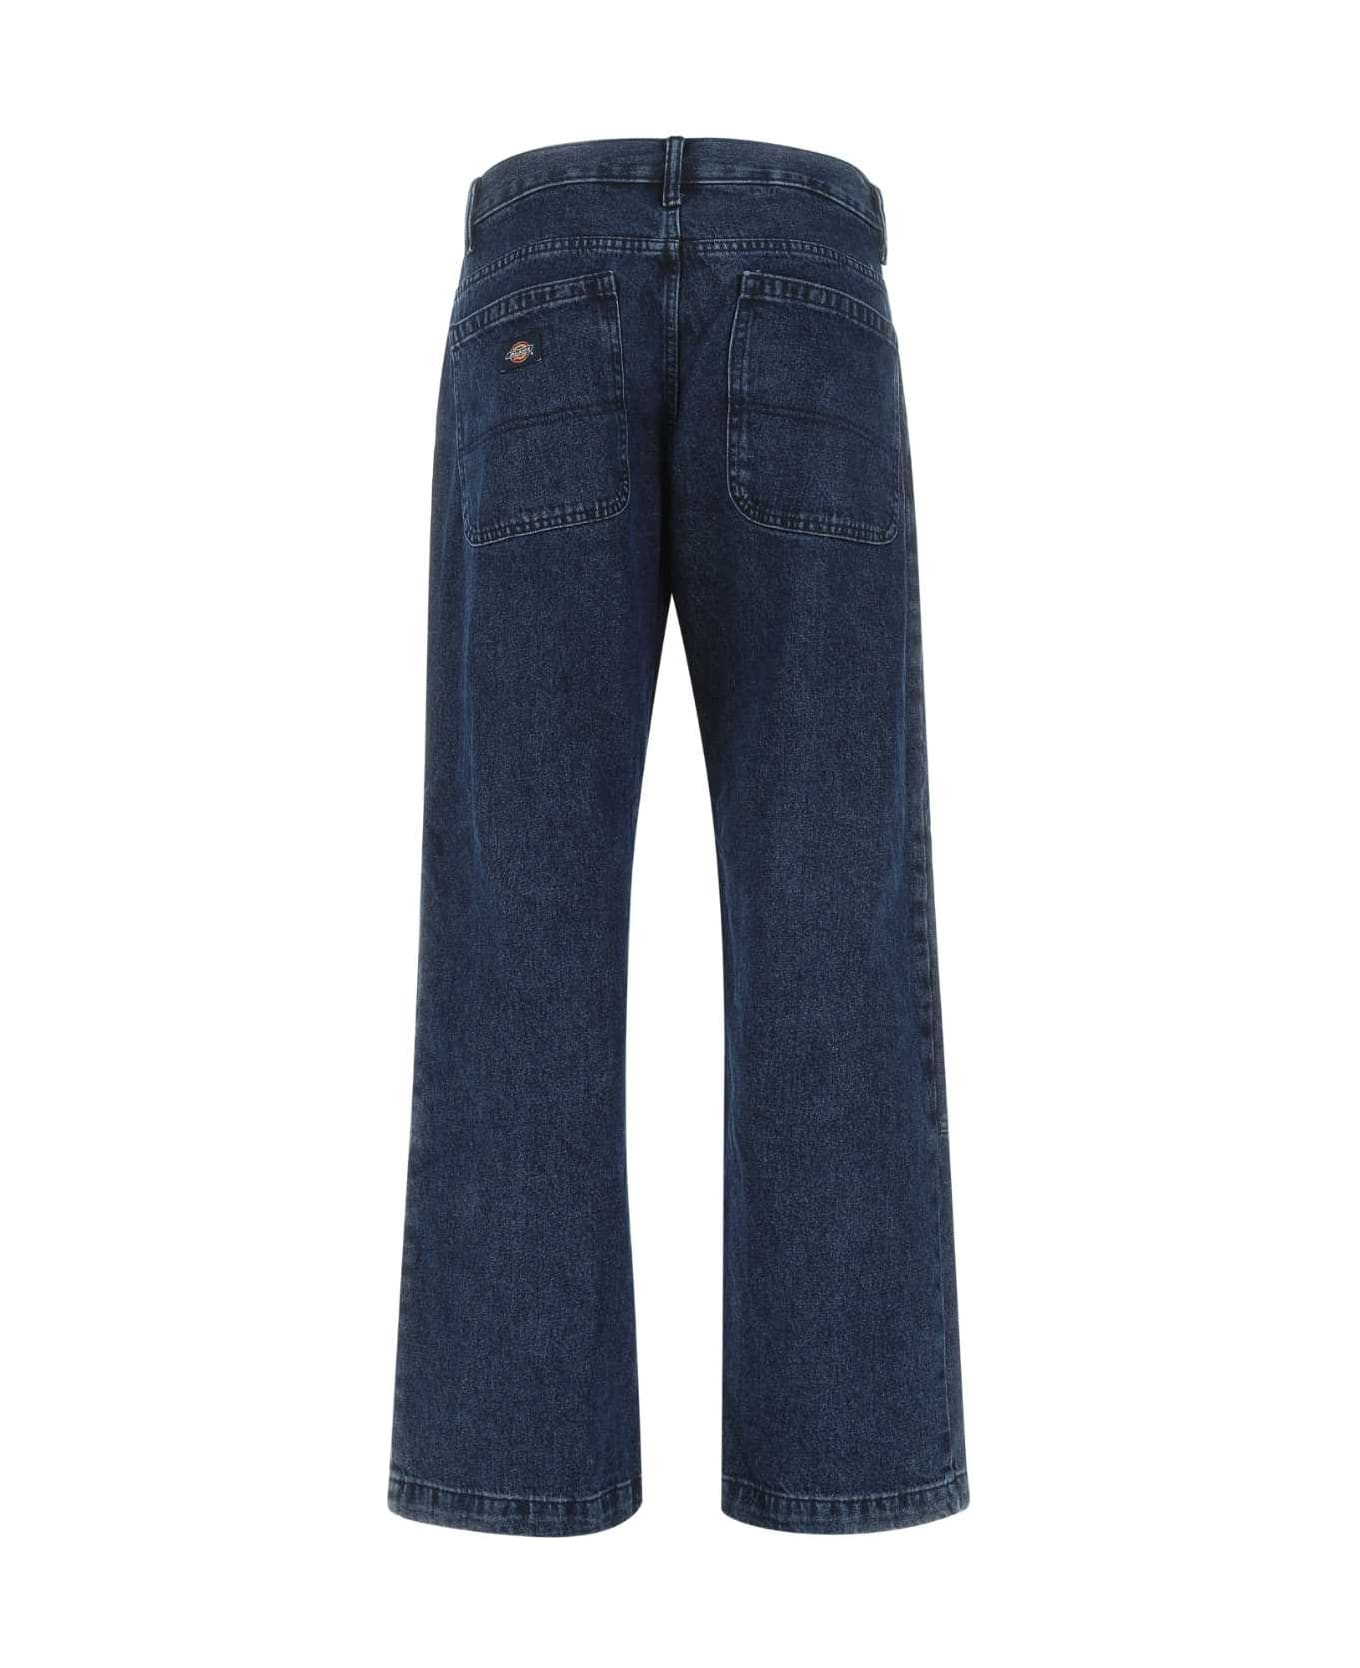 Dickies Blue Denim Jeans - IND1 デニム